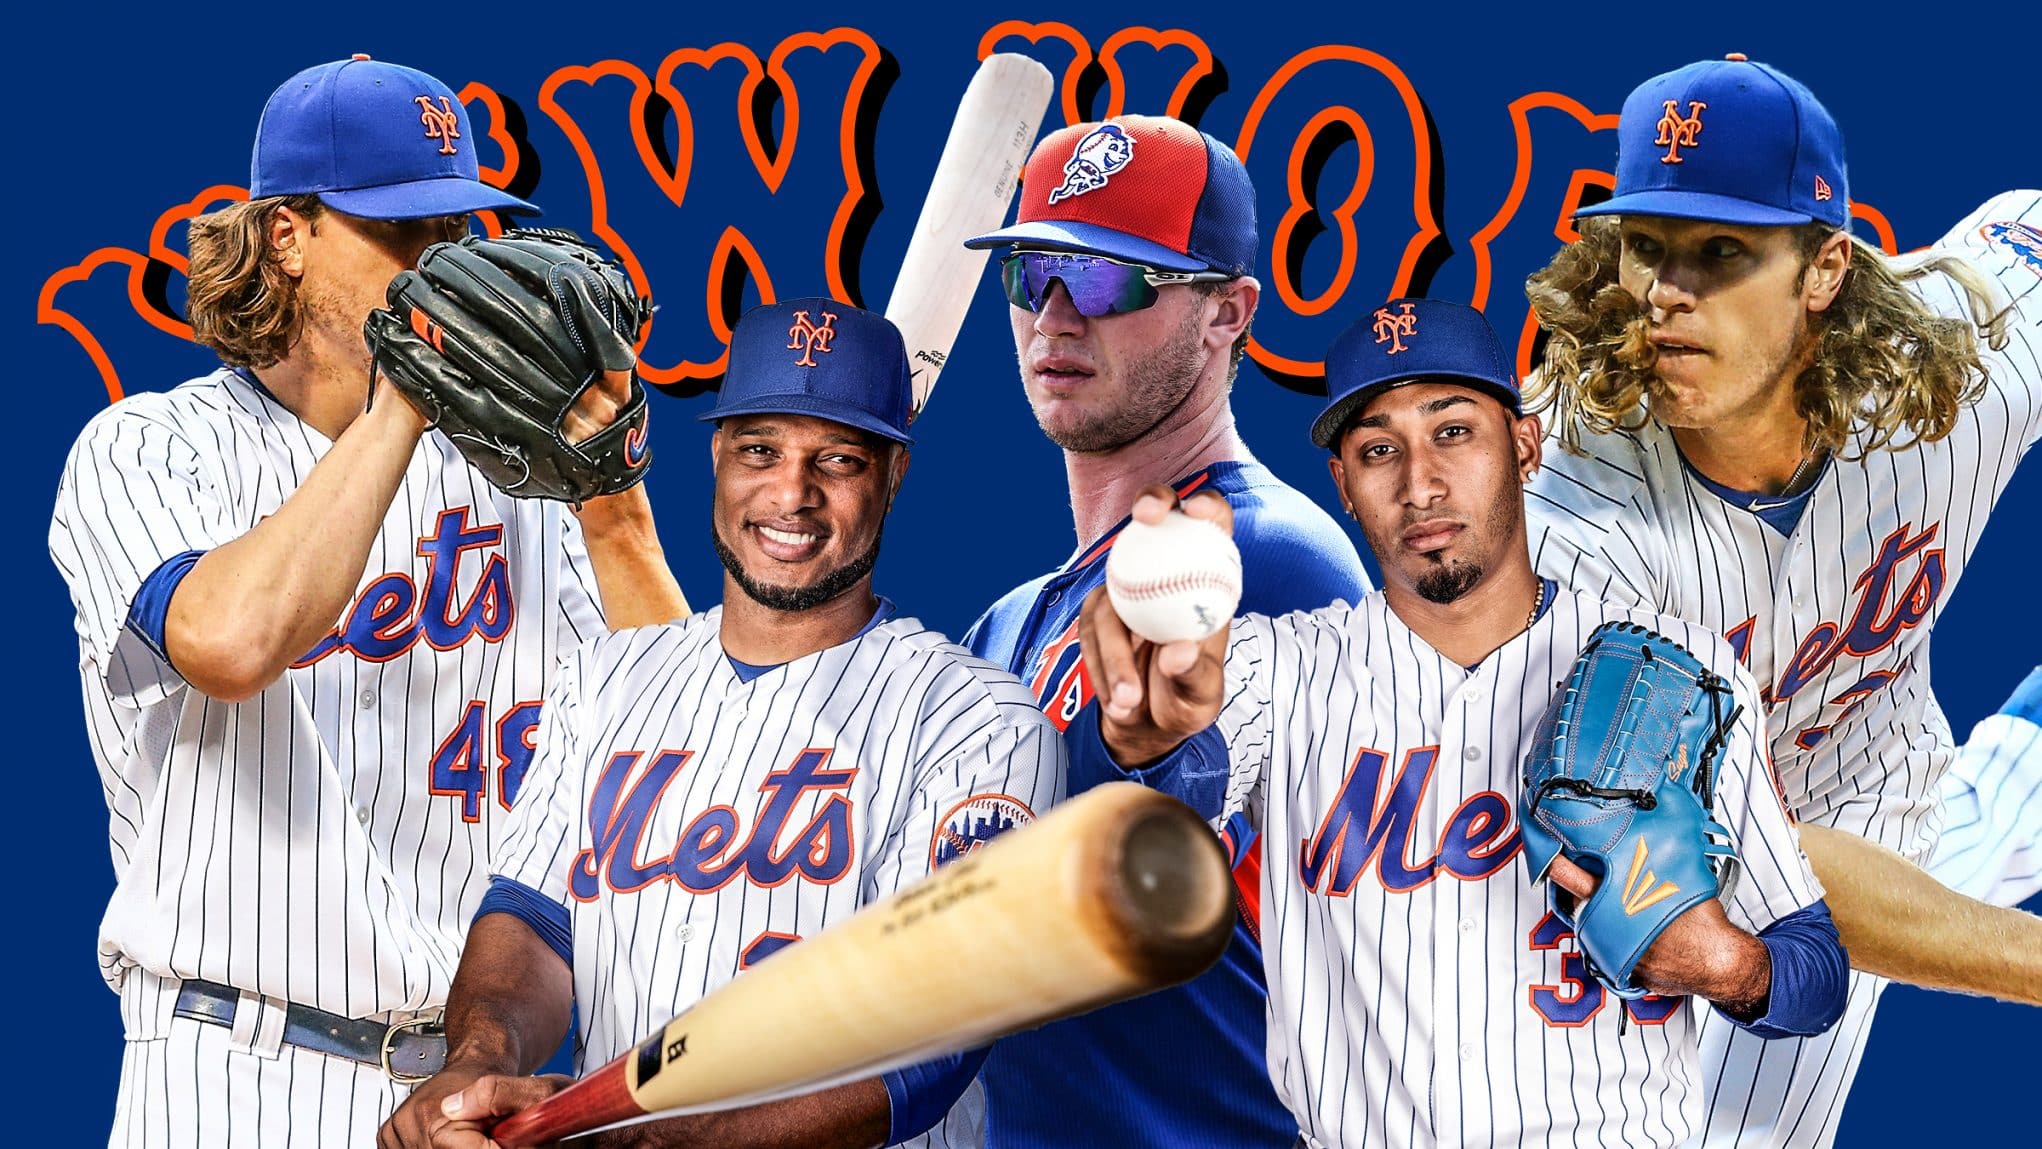 New York Mets tickets